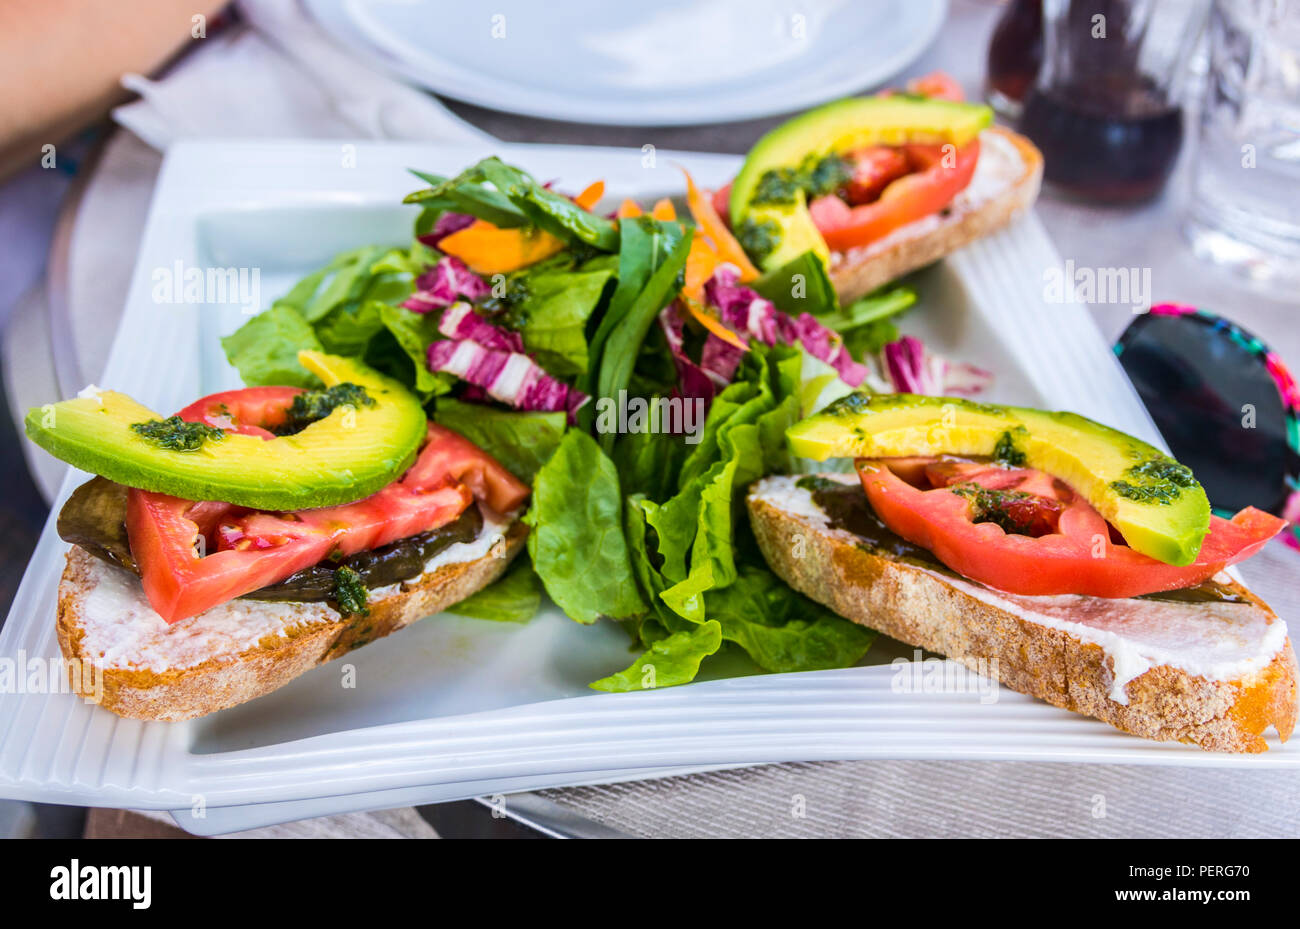 caprese starter, tomato basil avocado, crusty bread, greens, salad, eating al fresco, Italy, Europe Stock Photo